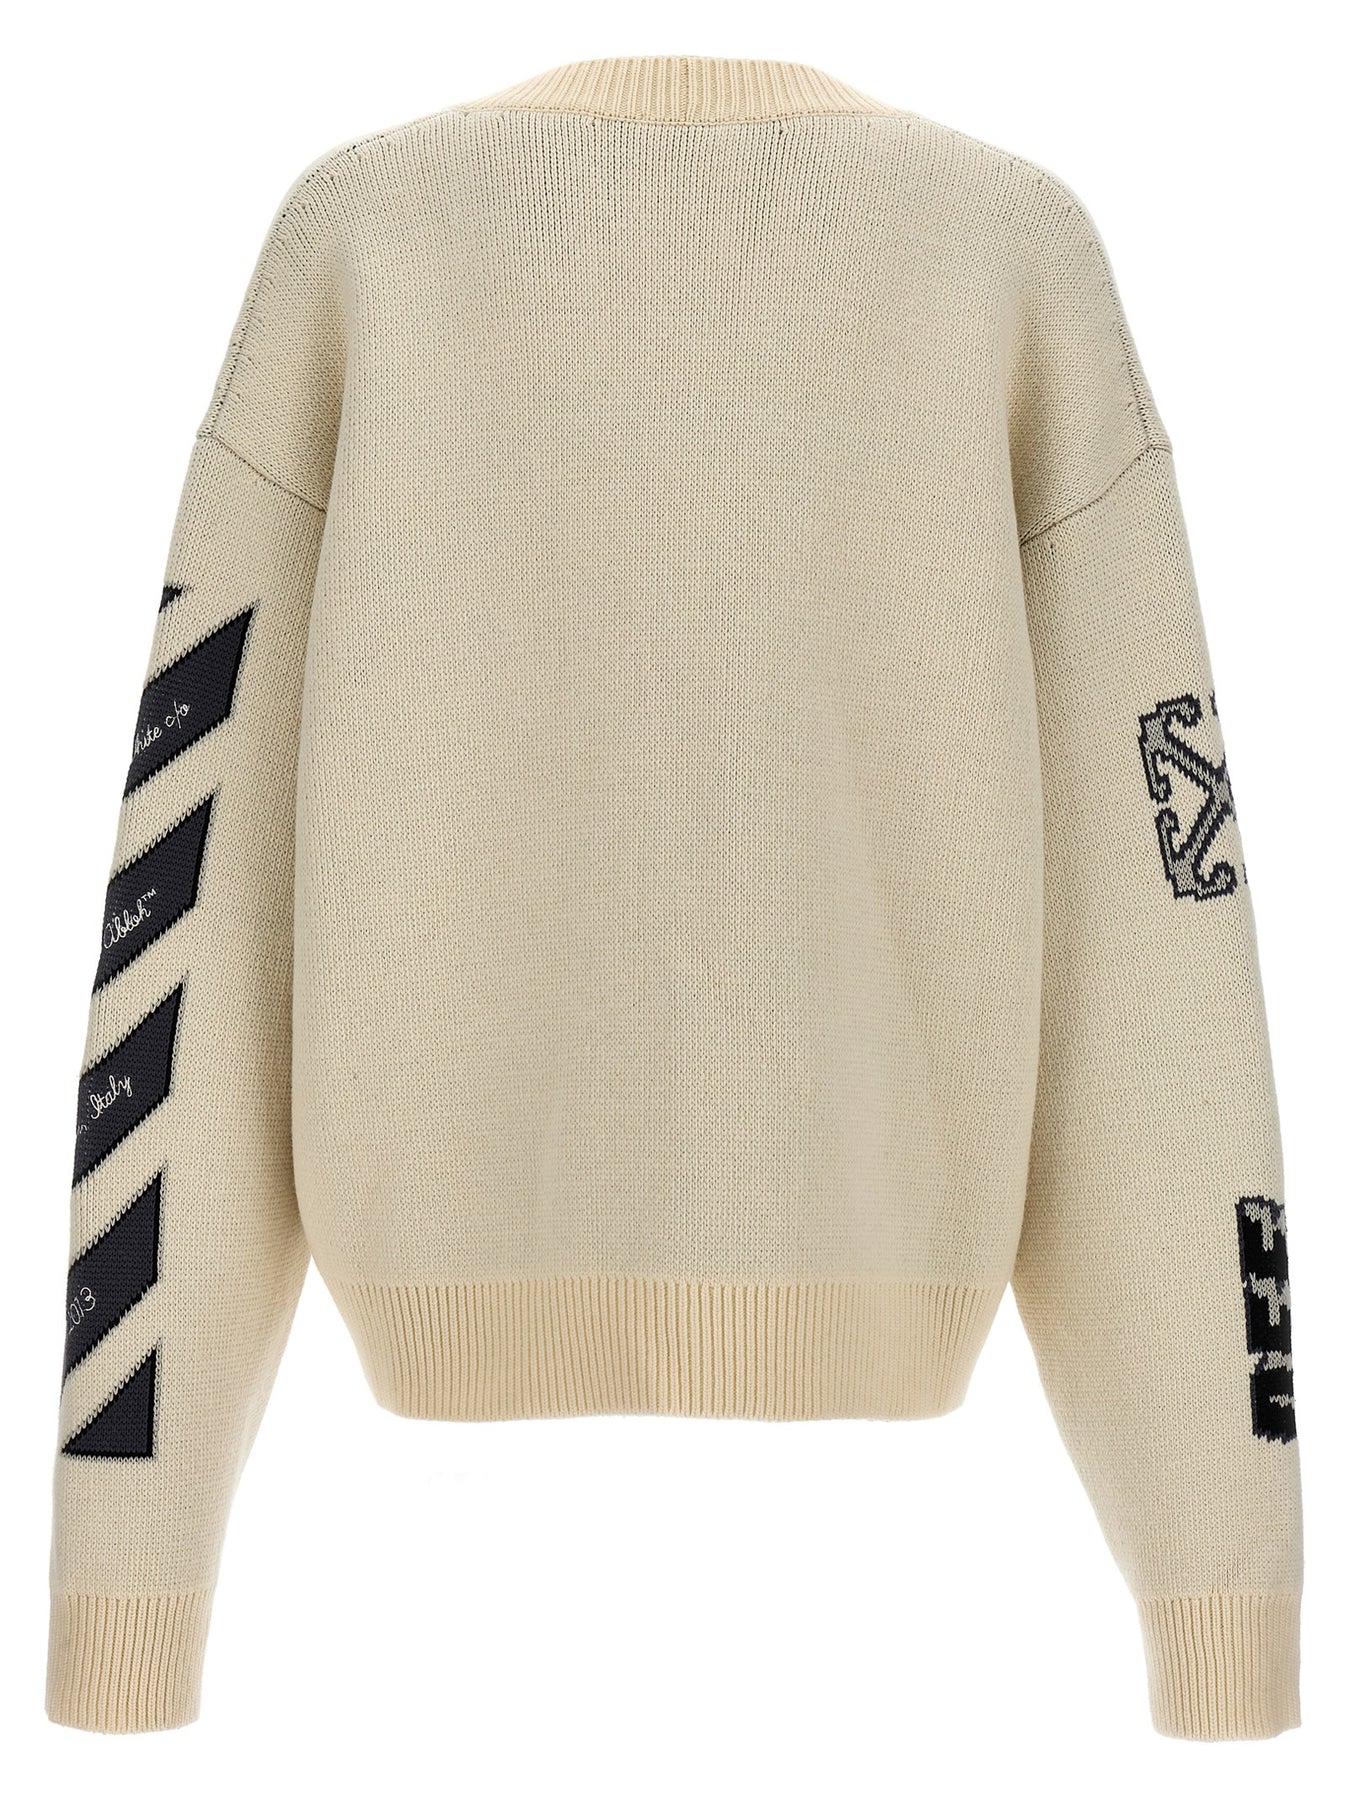 Shop Off-white Varsity Sweater, Cardigans